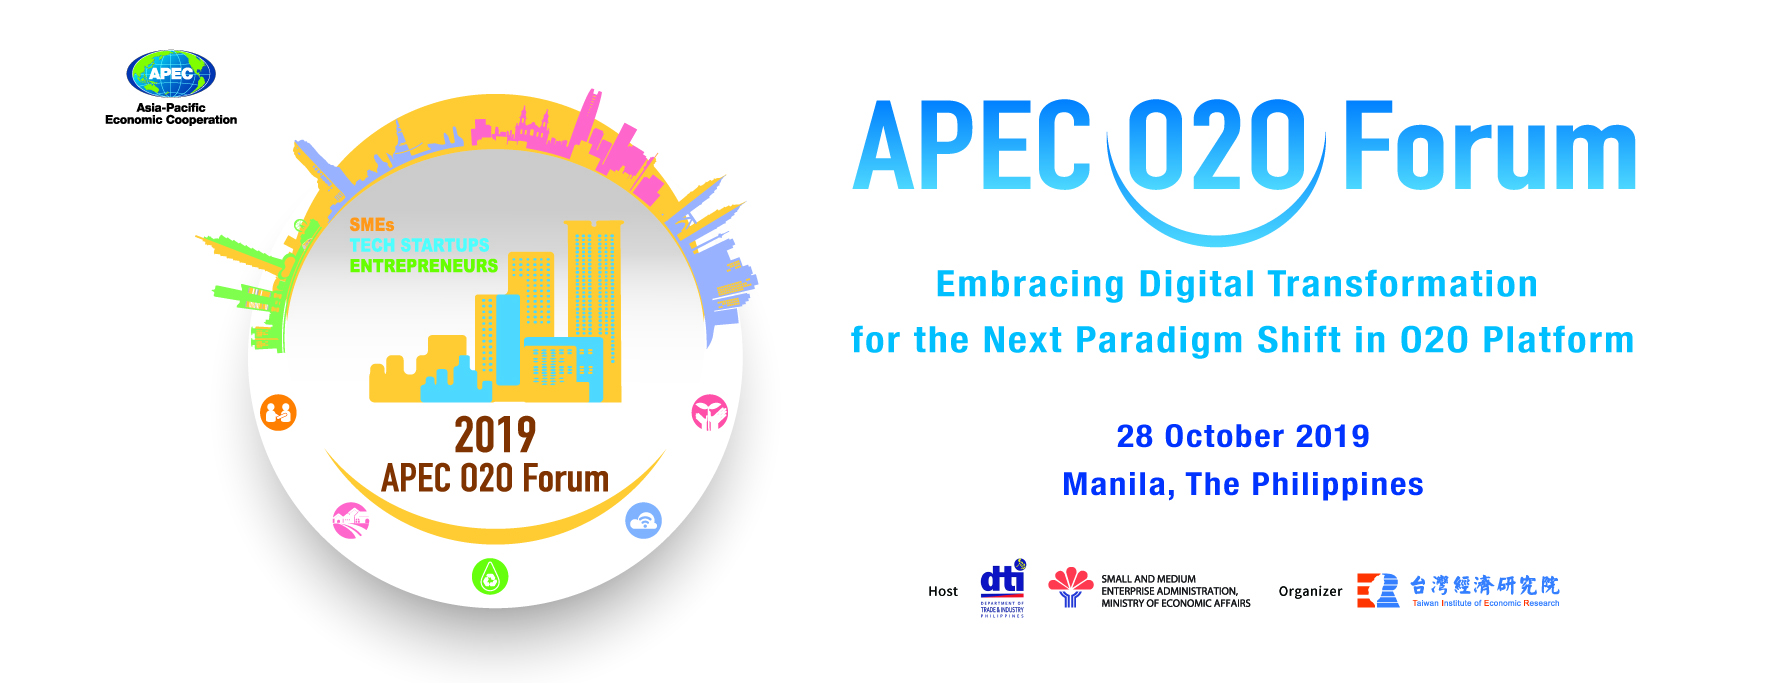 APEC O2O Forum_the Philippines